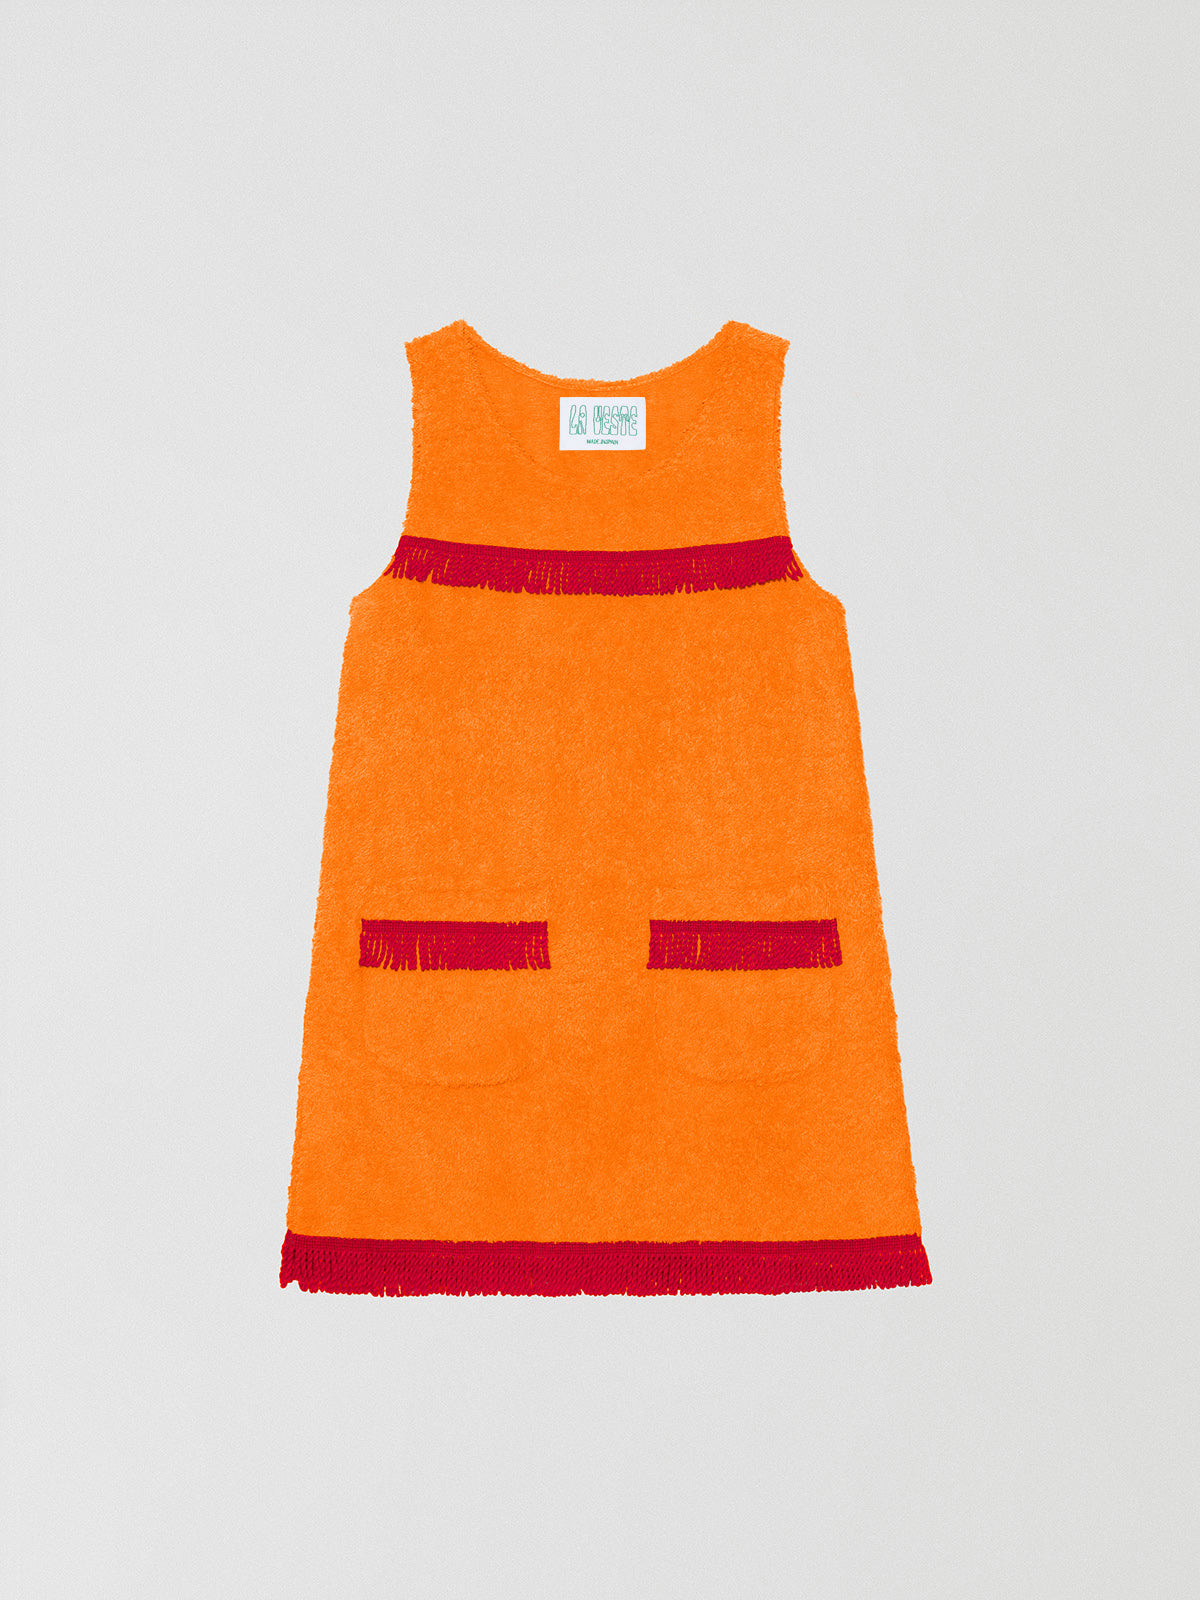 Fringes Mini Towel Orange is a short orange towel dress with red fringe detailing on the pockets and chest.